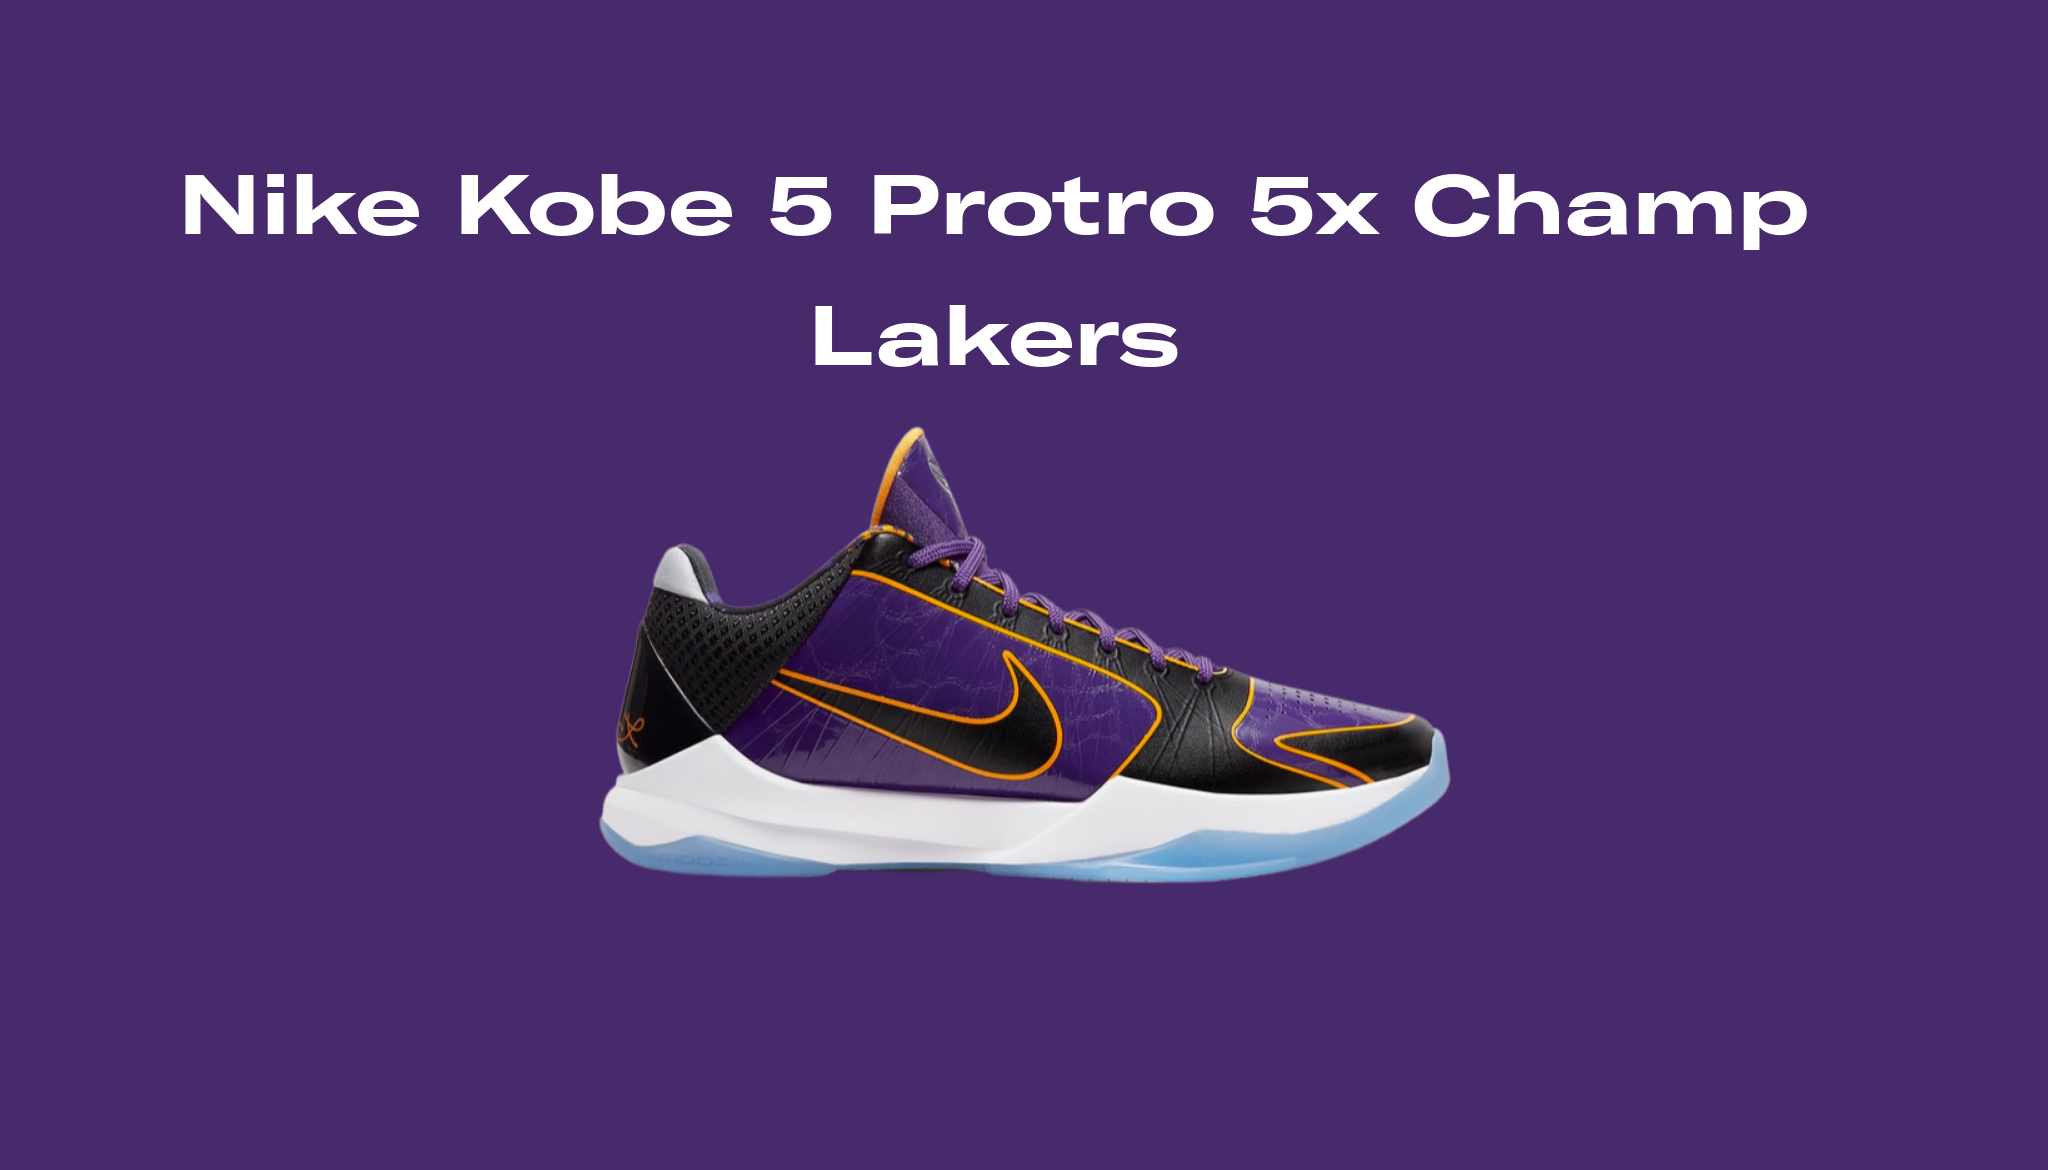 Nike kobe 5 lakers Kobe 5 Protro 5x Champ Lakers, Raffles and Release Date